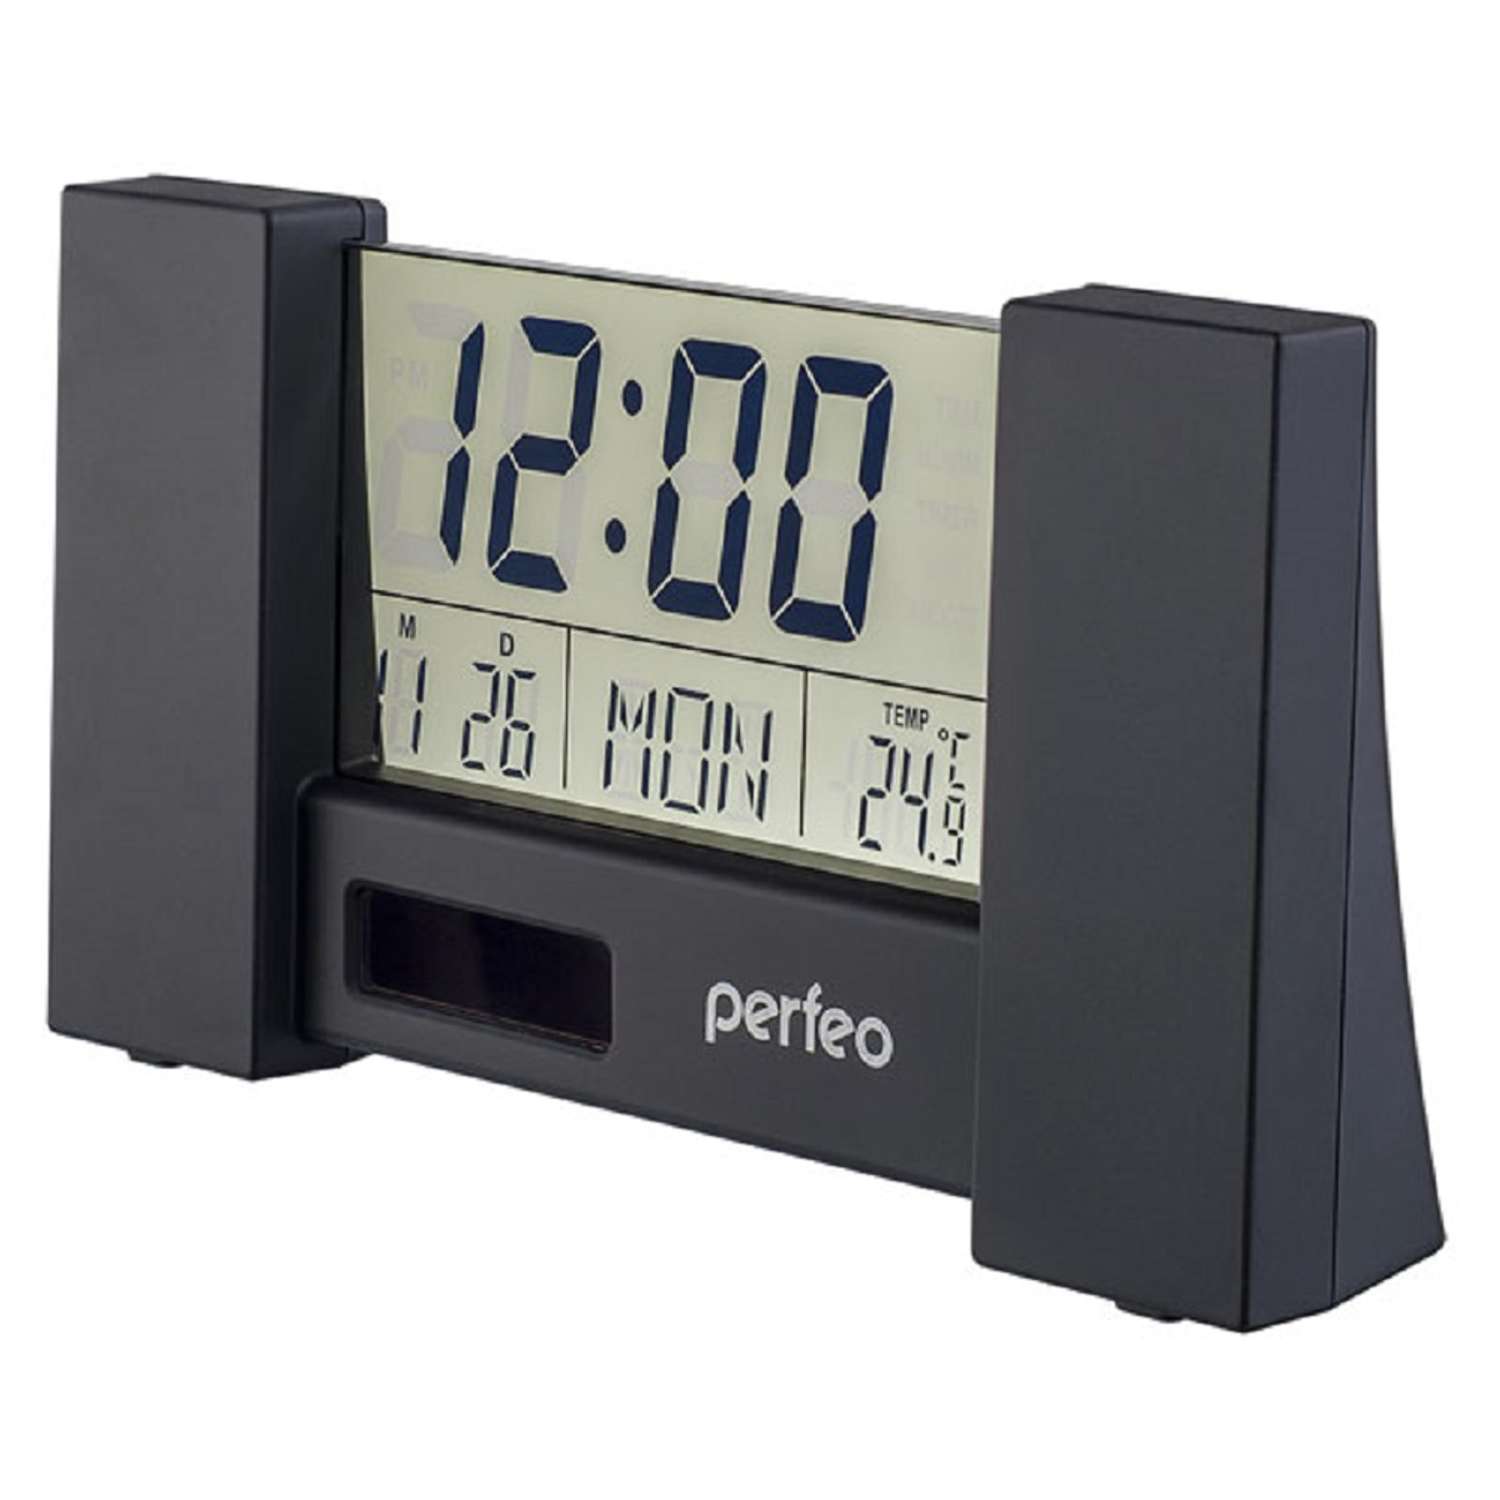 Часы-будильник Perfeo City чёрный PF-S2056 время температура дата - фото 1